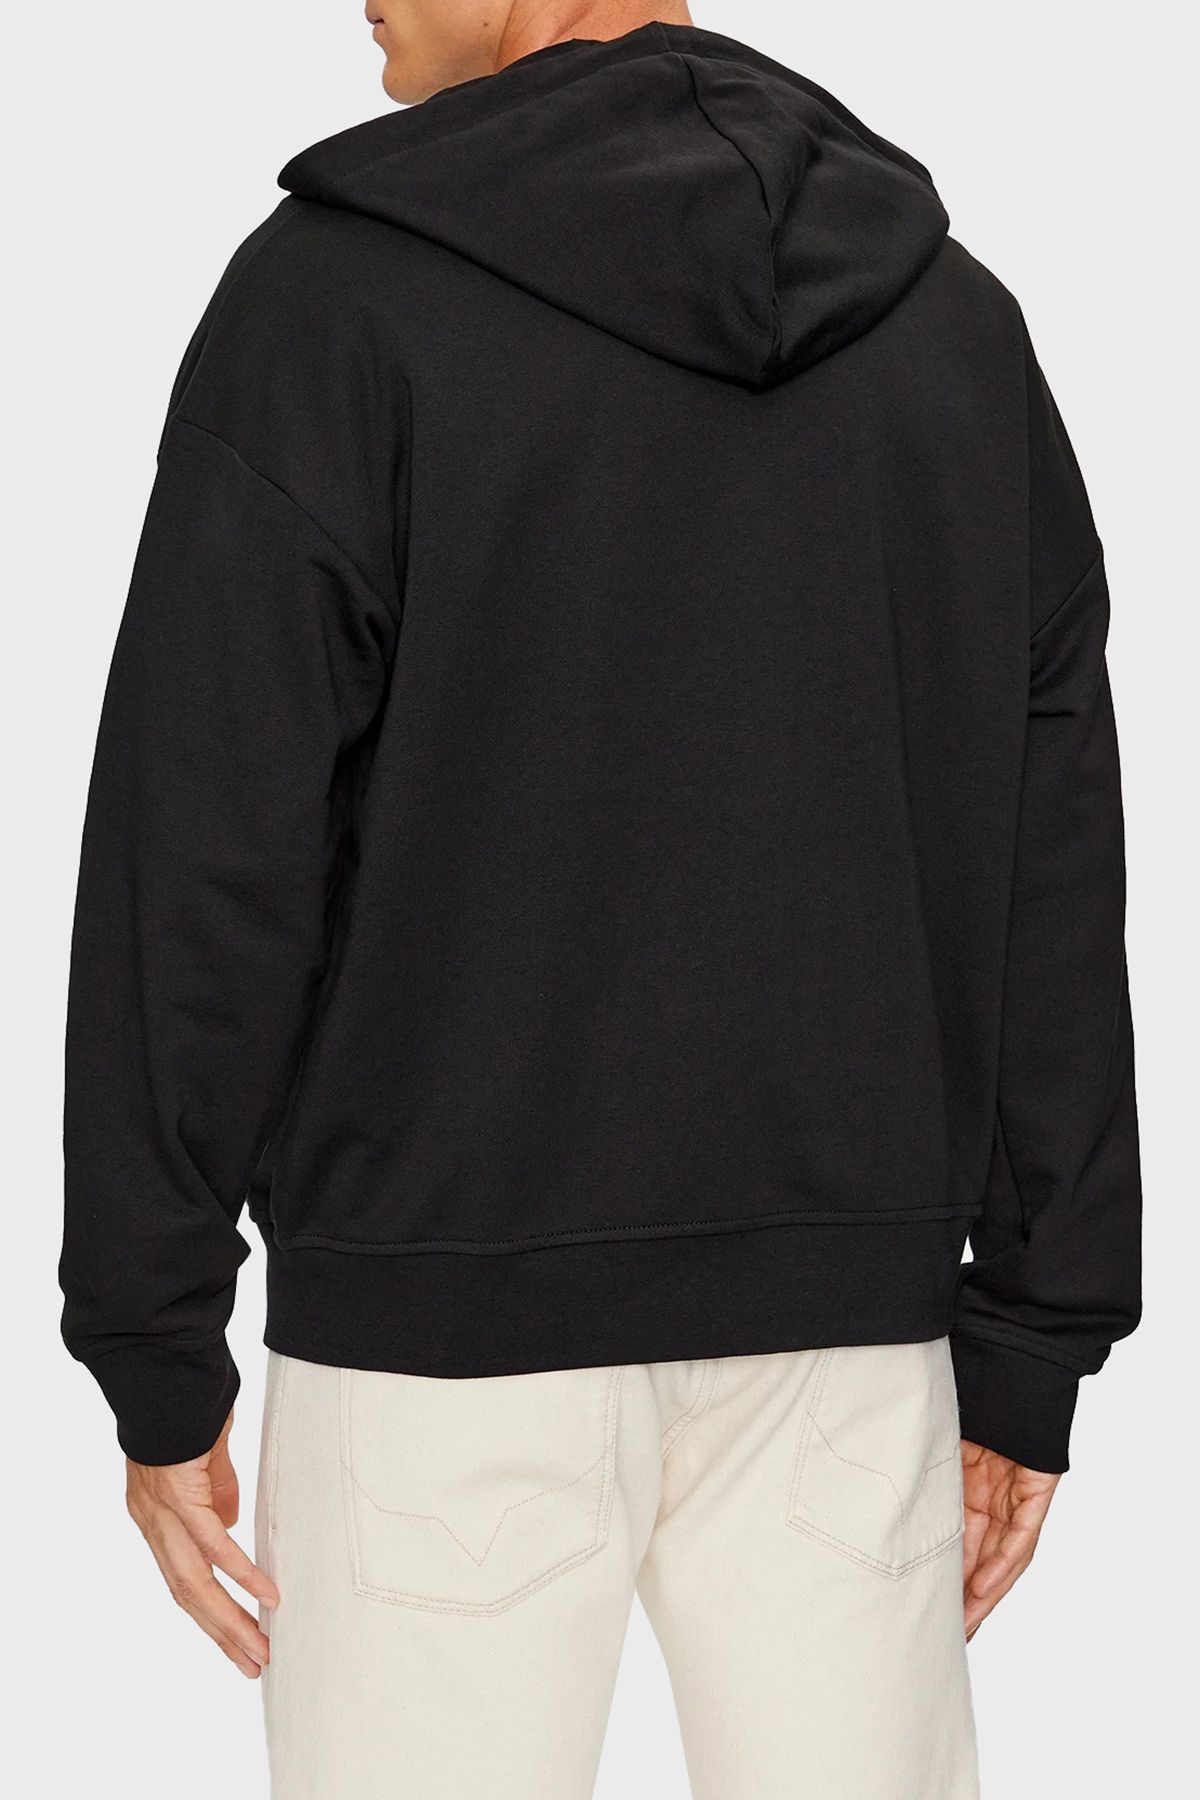 EA7 Emporio Armani Zip-up hoodie | Women's Clothing | Vitkac